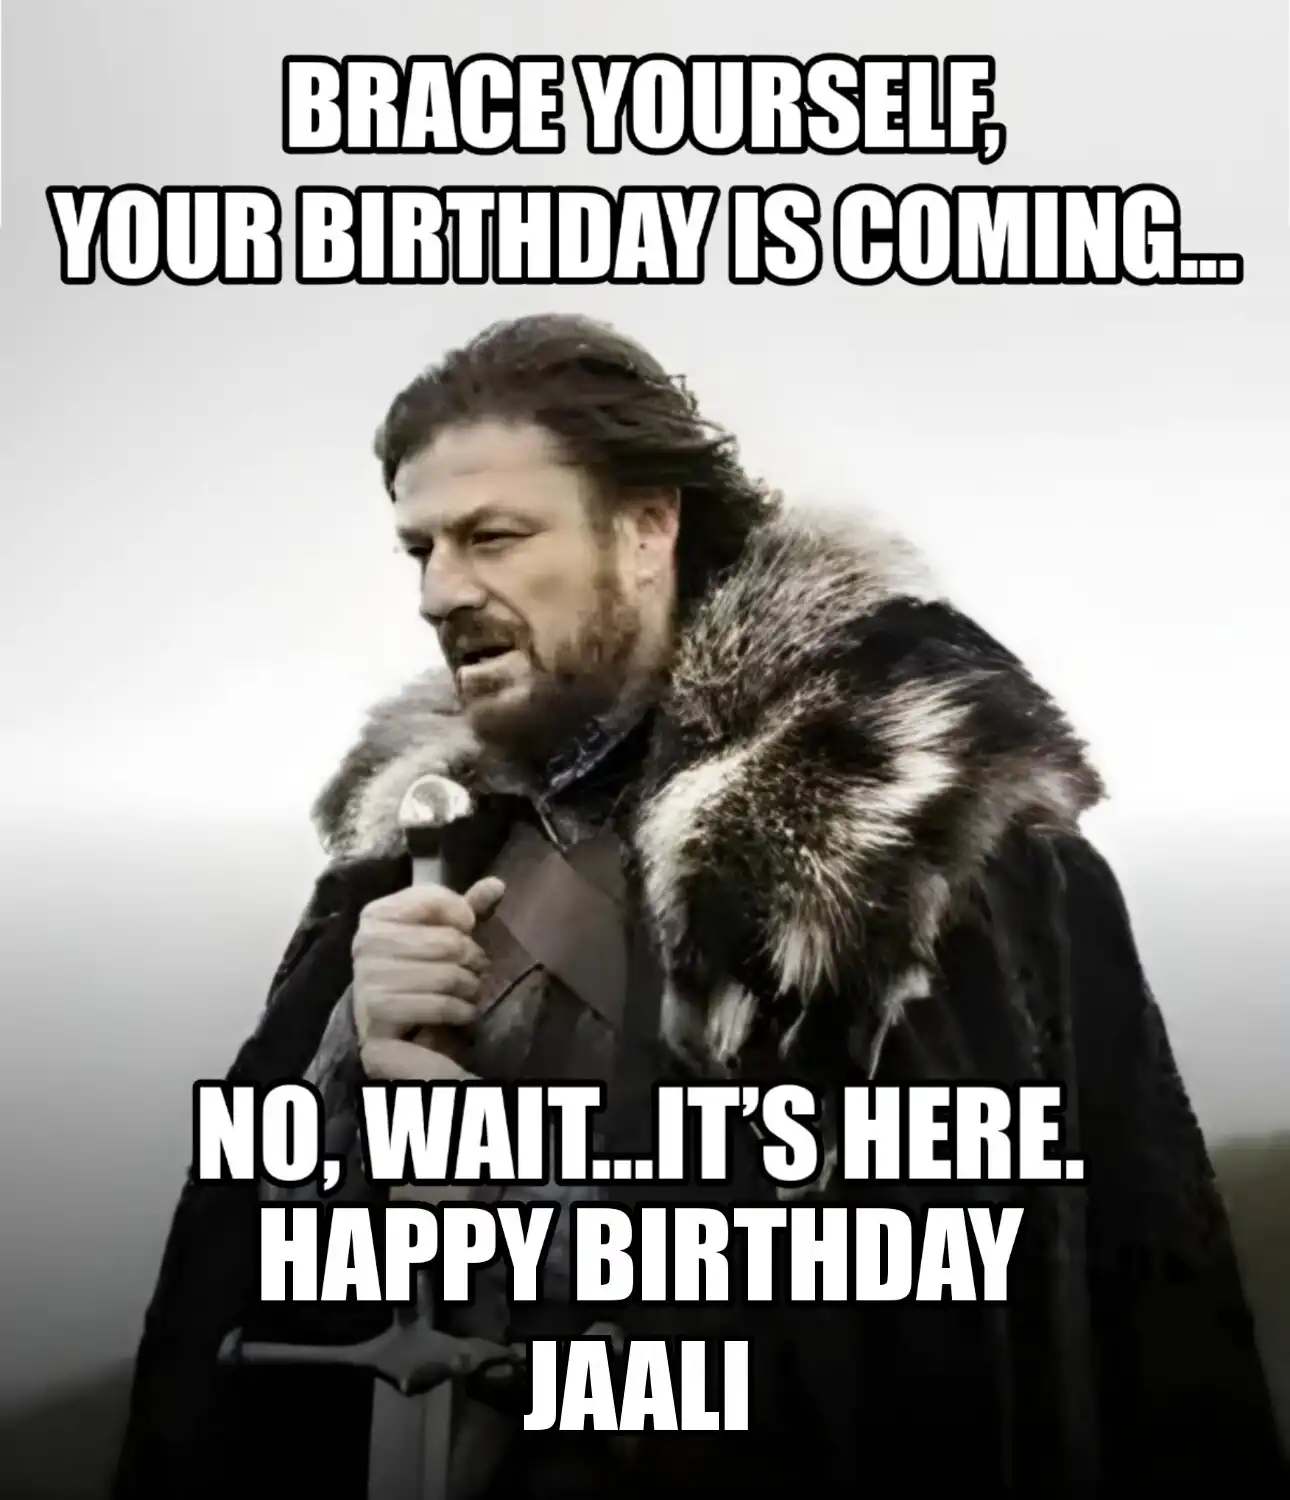 Happy Birthday Jaali Brace Yourself Your Birthday Is Coming Meme